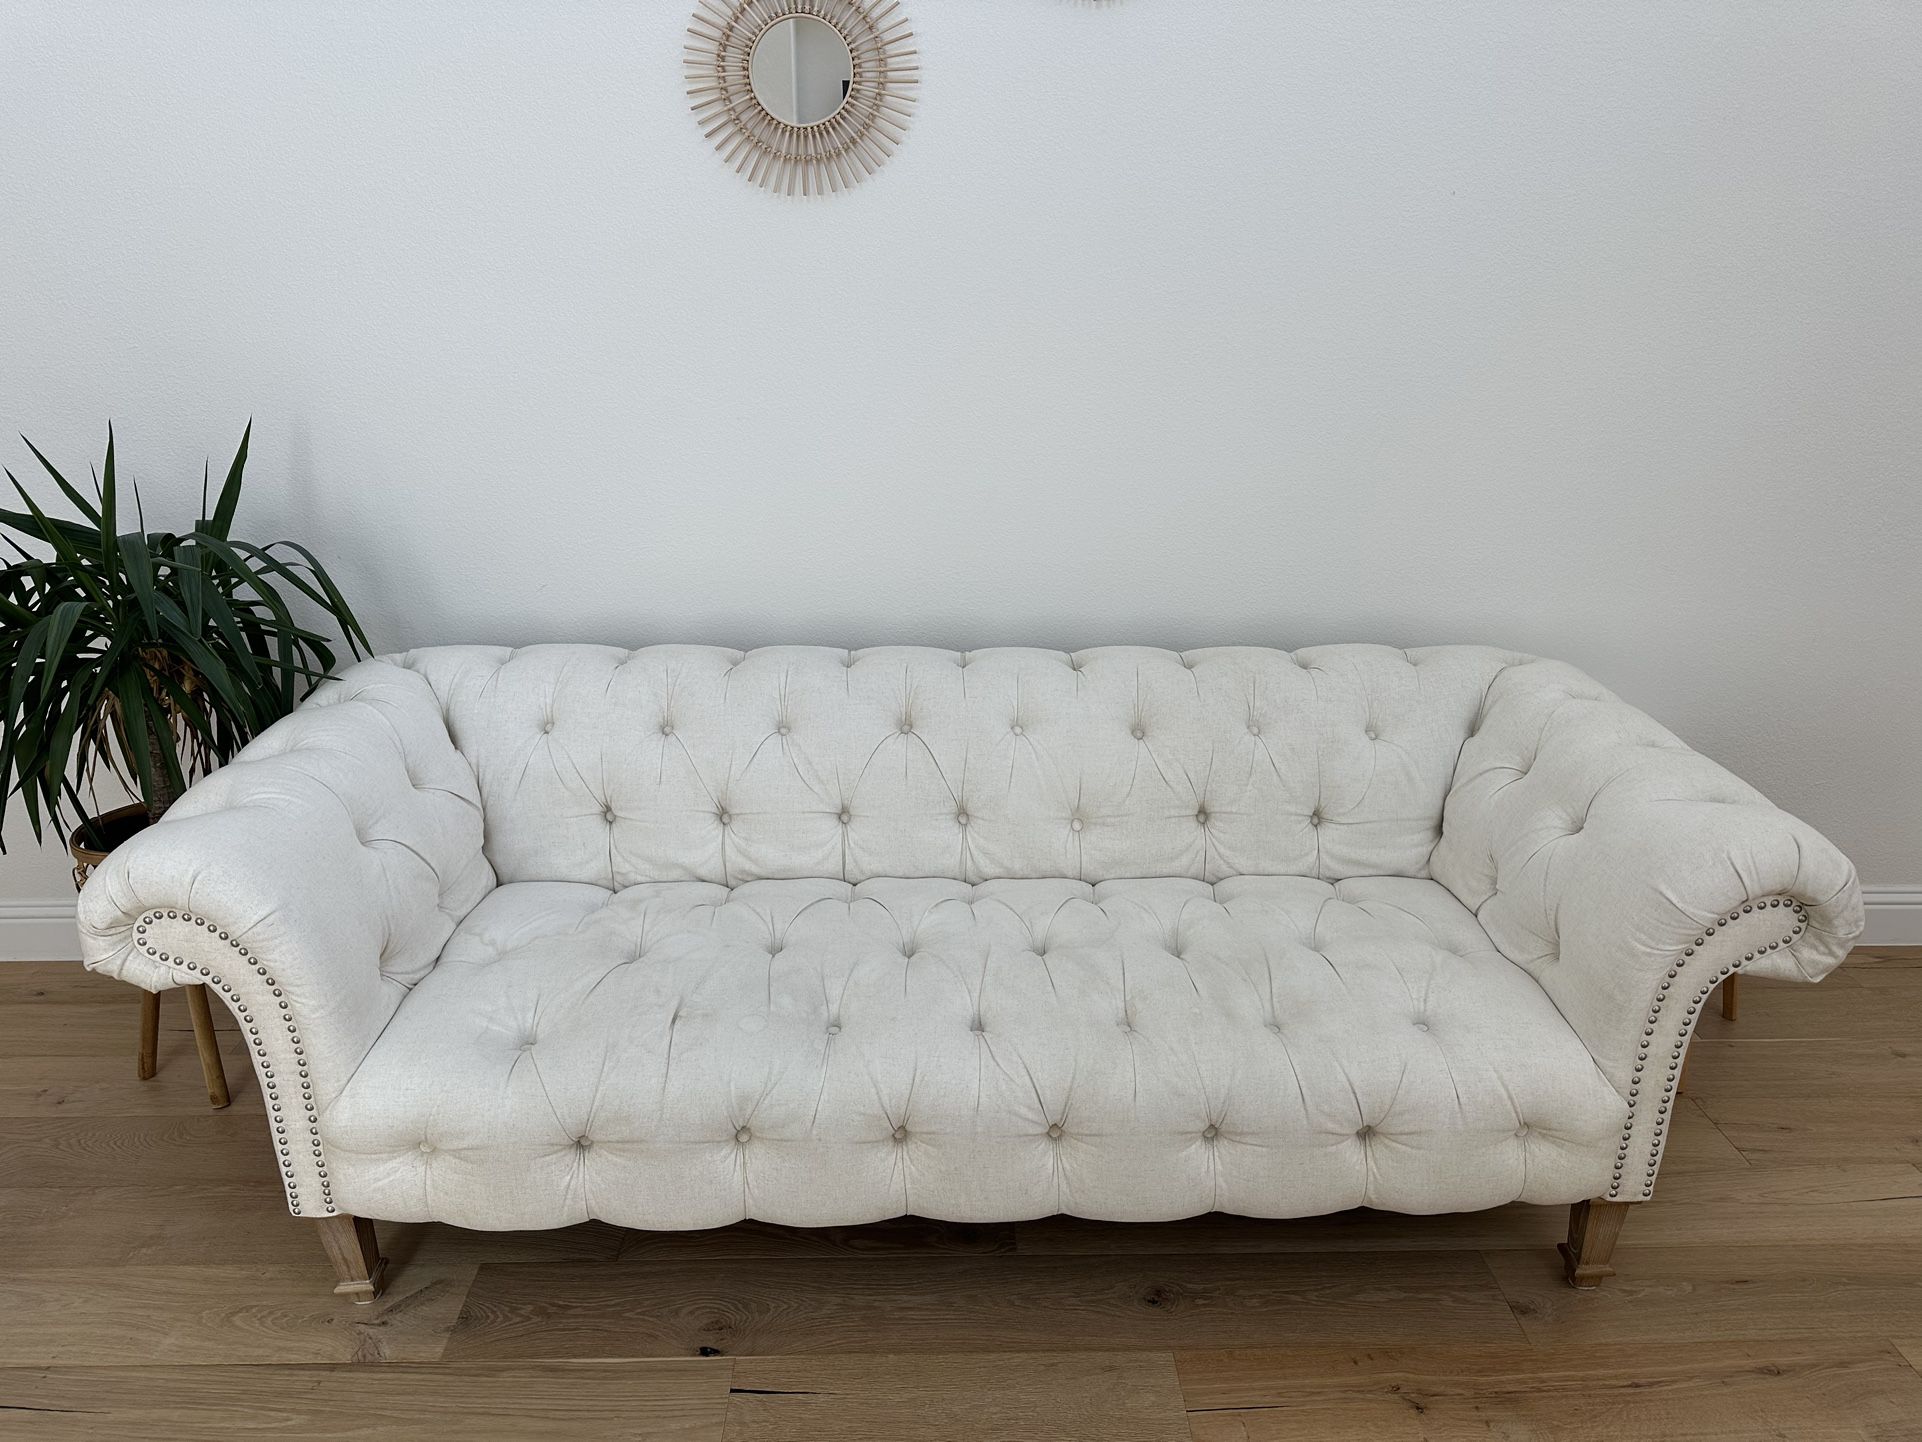 Couch futon 